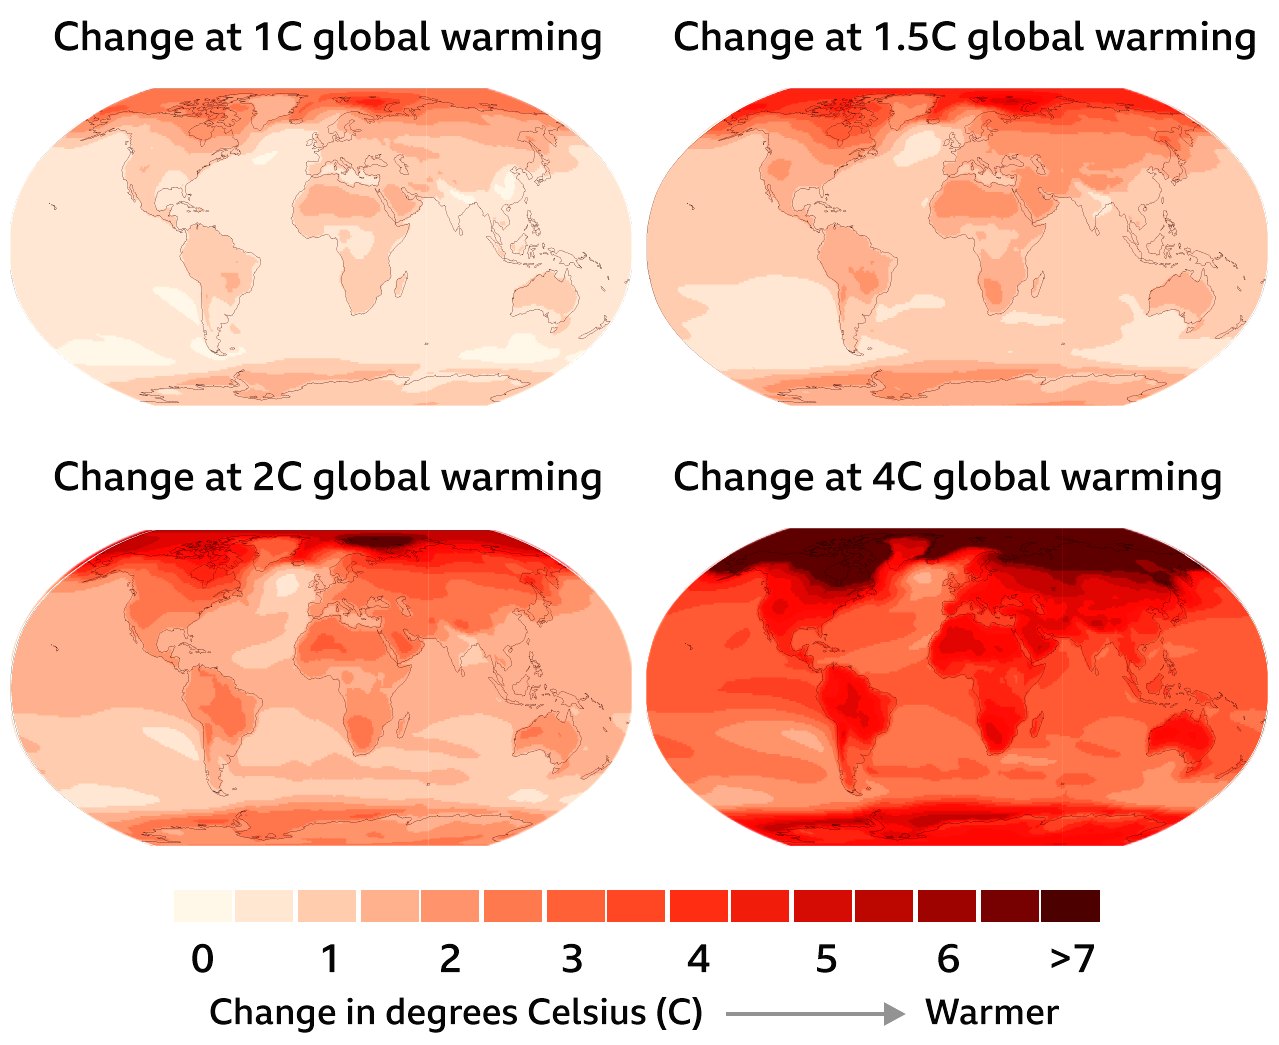 Global temperates at 1 degree centigrade and 4 degress of global warming